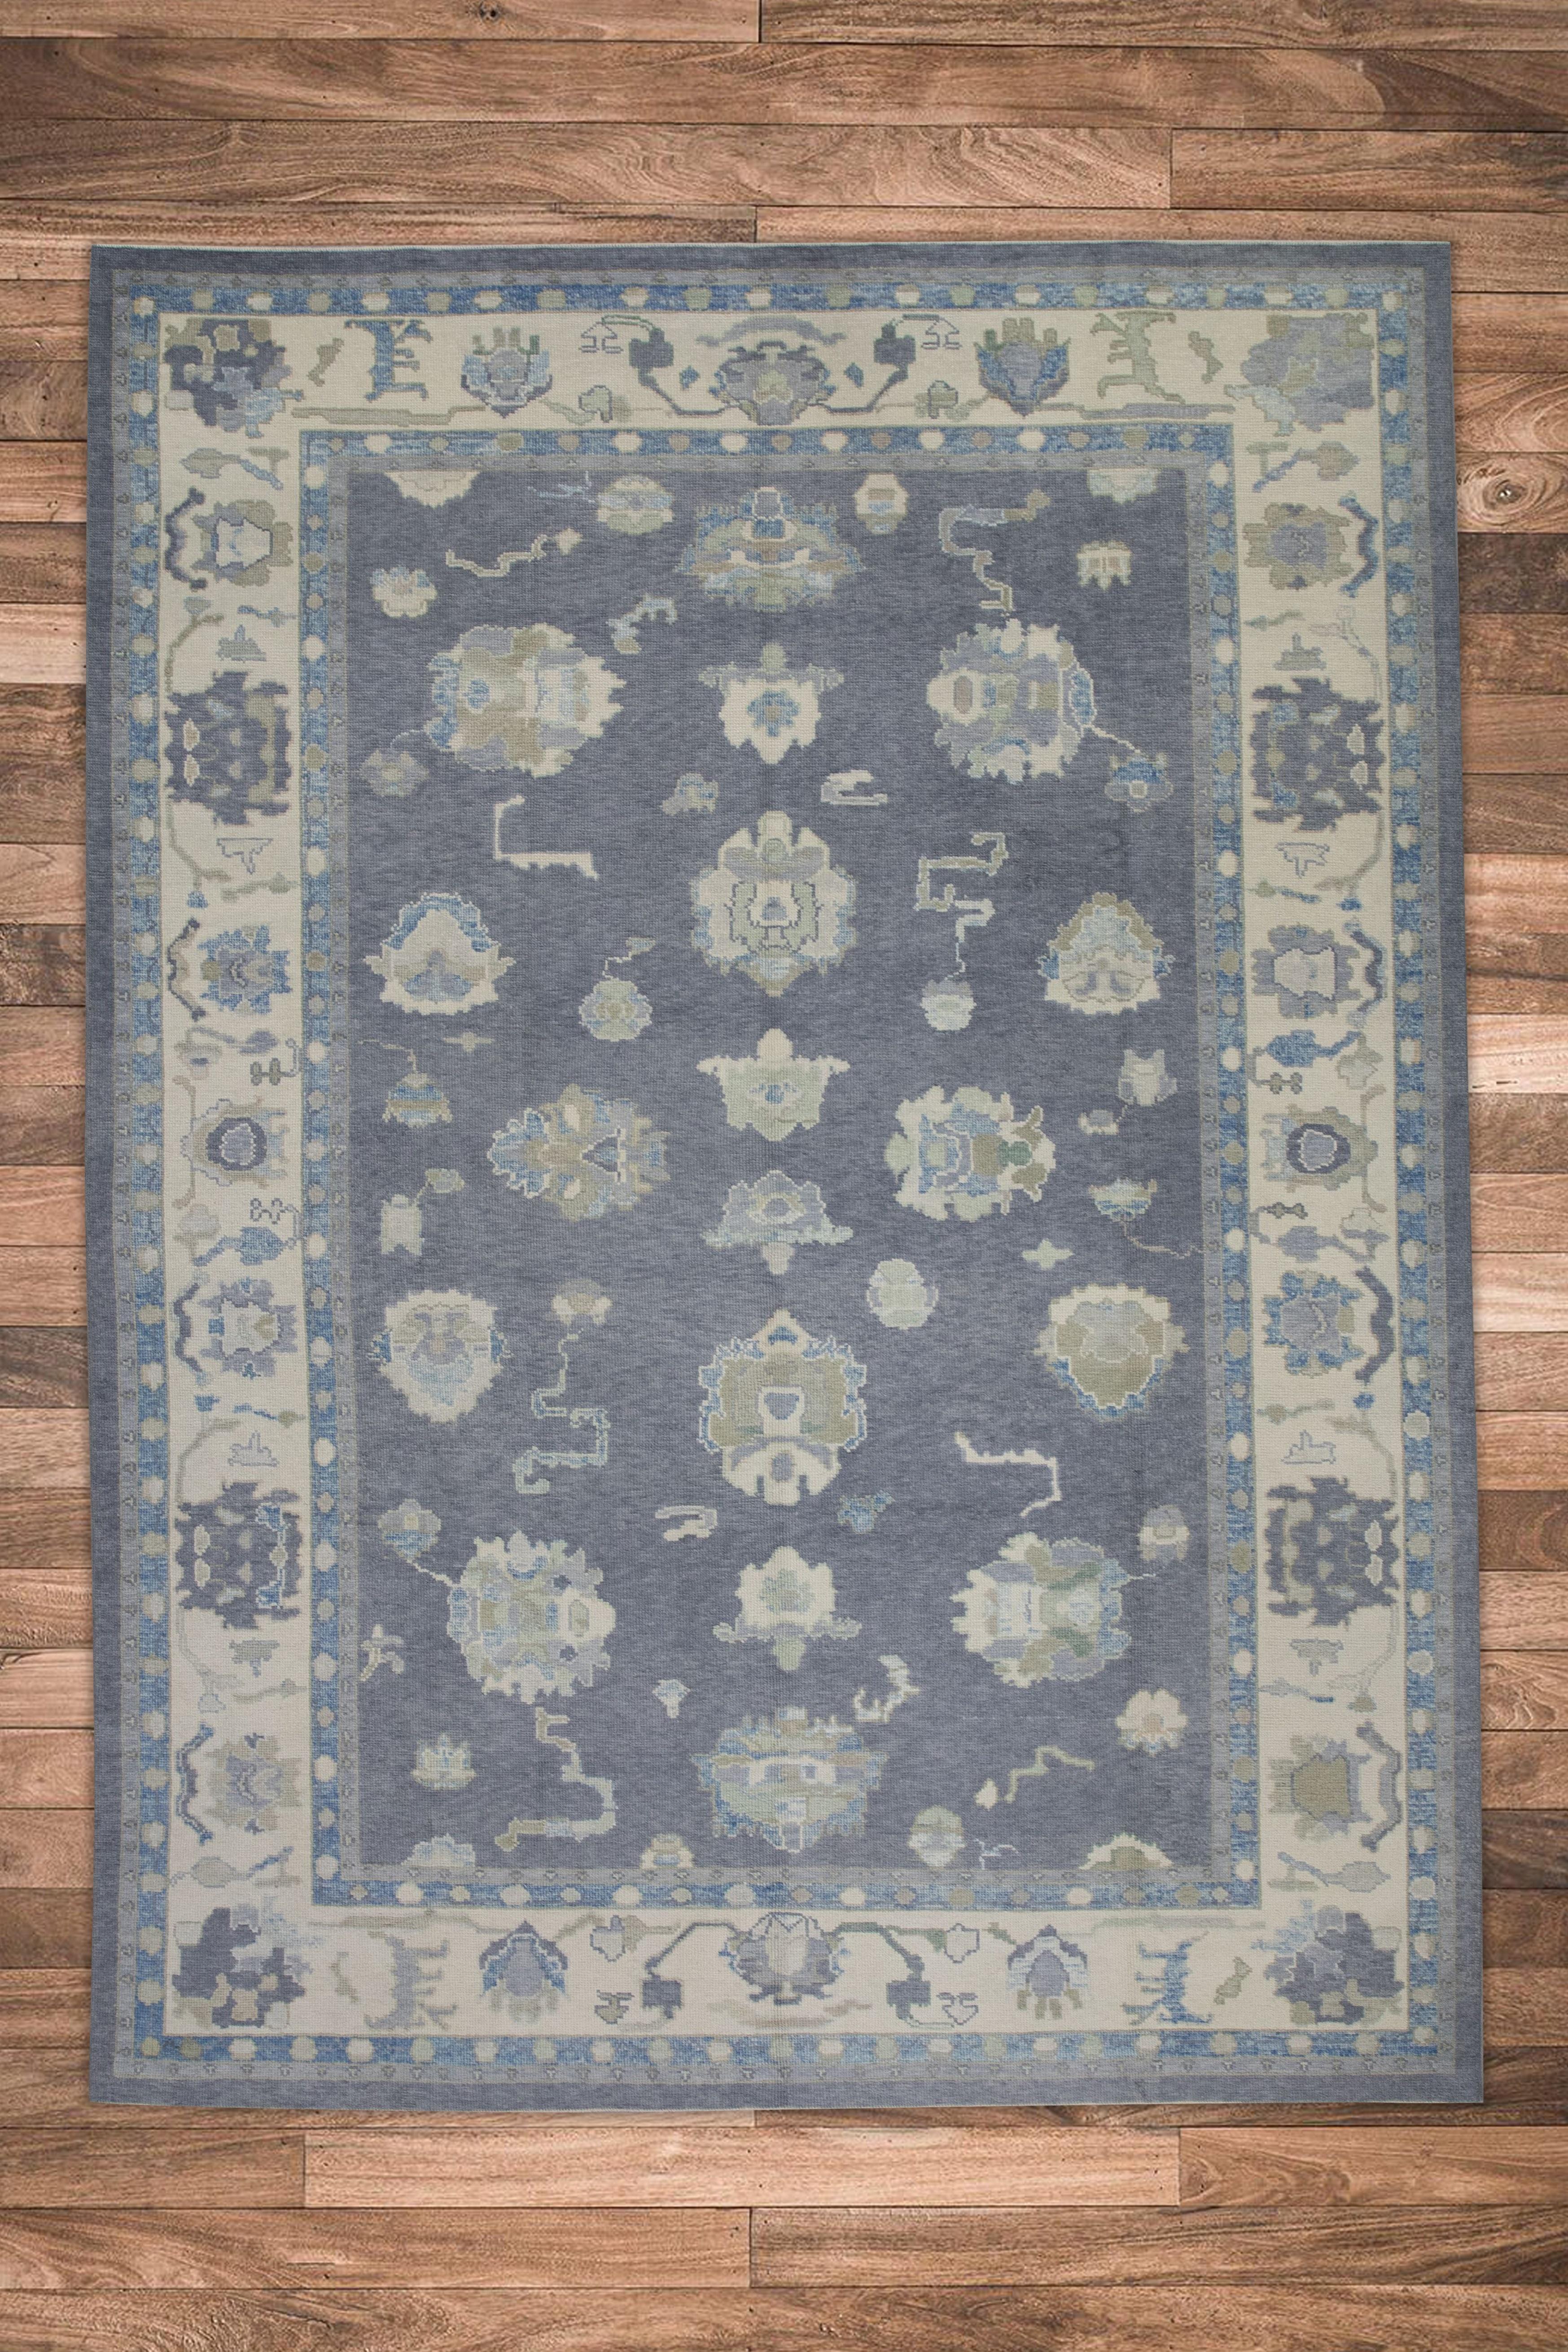 Gray & Blue Floral Design Handwoven Wool Turkish Oushak Rug 9' X 11'10